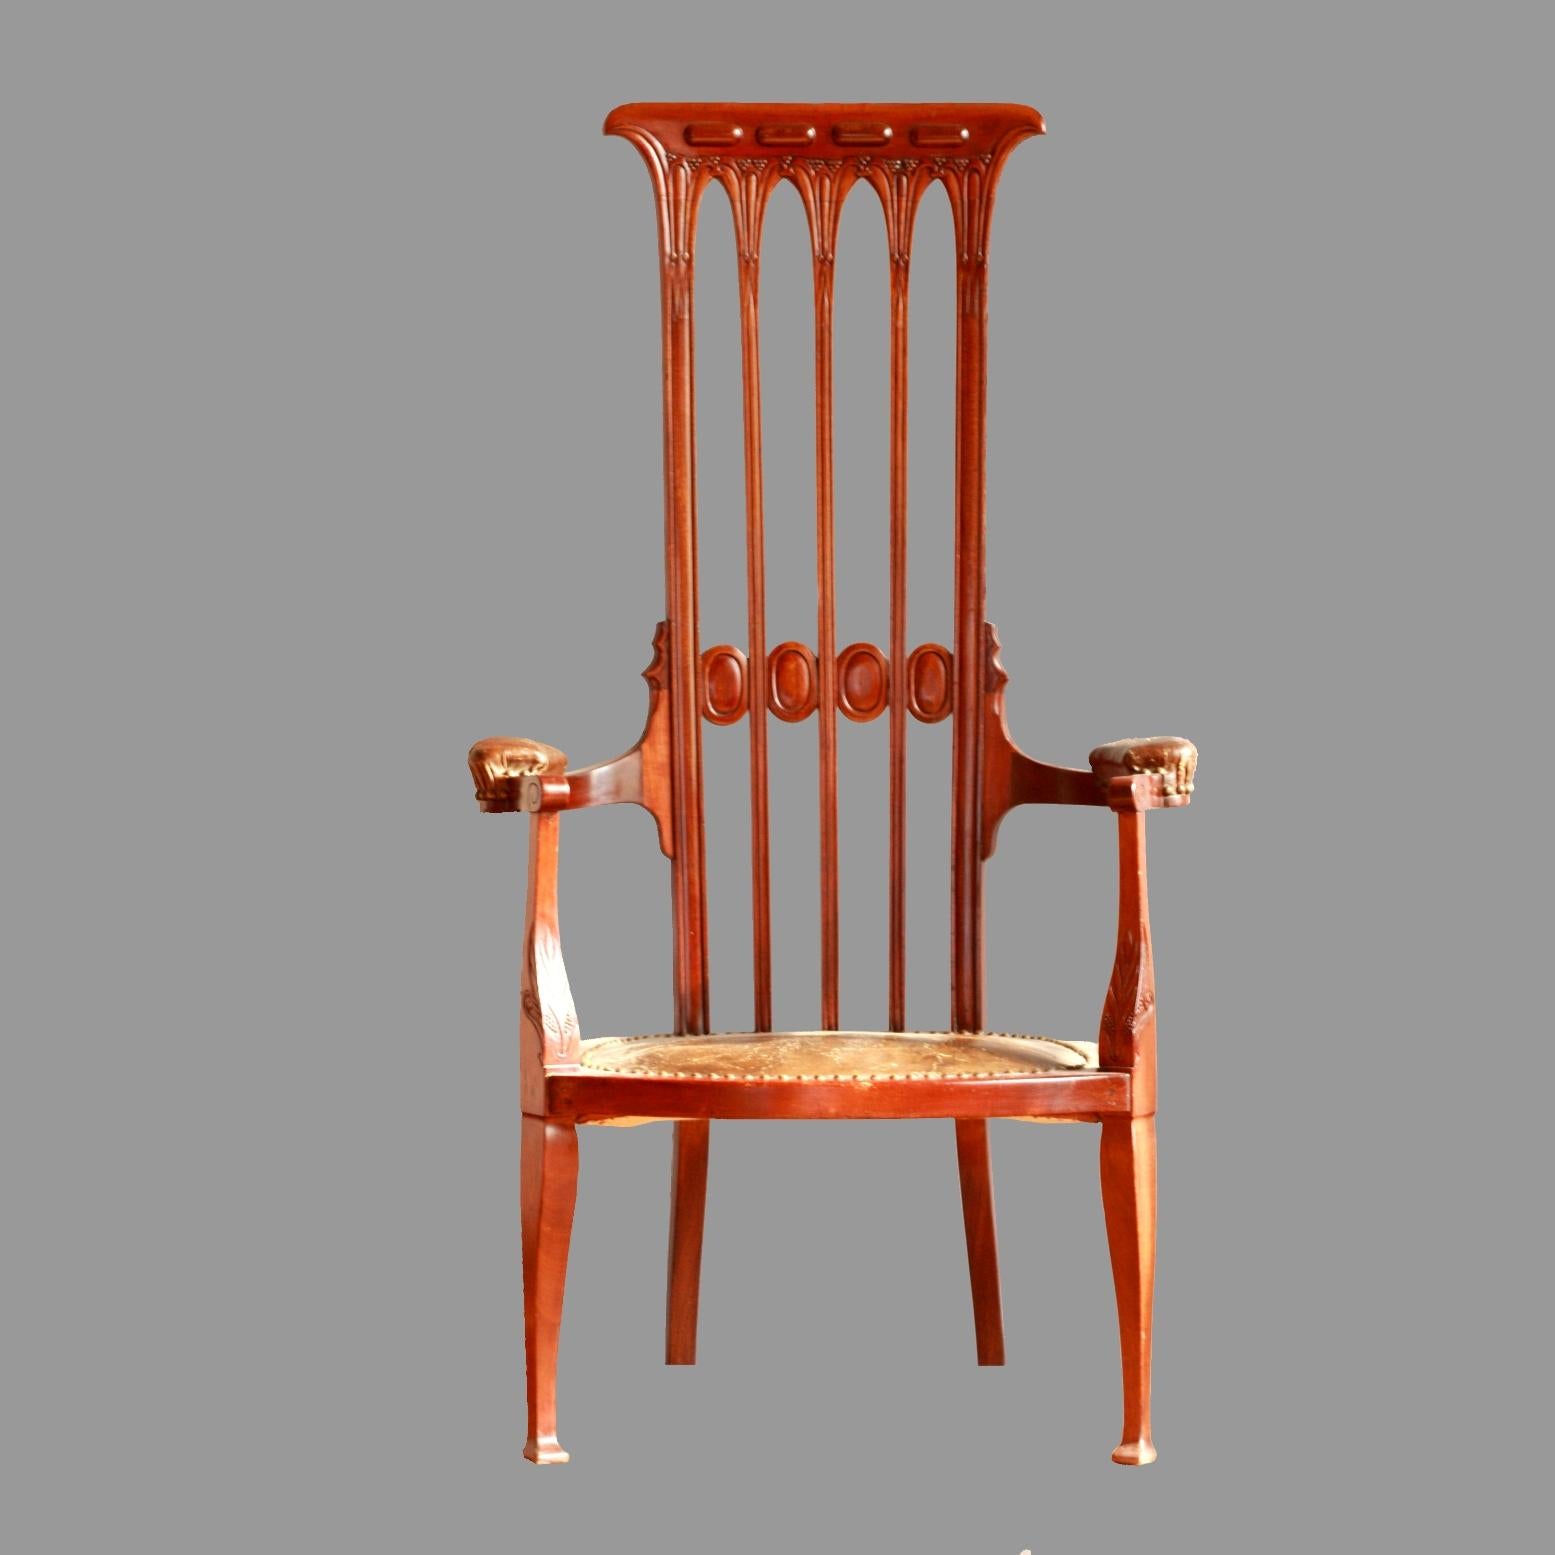 Art Nouveau High Backrest Original Condition  Chair, England, 1895  For Sale at 1stDibs